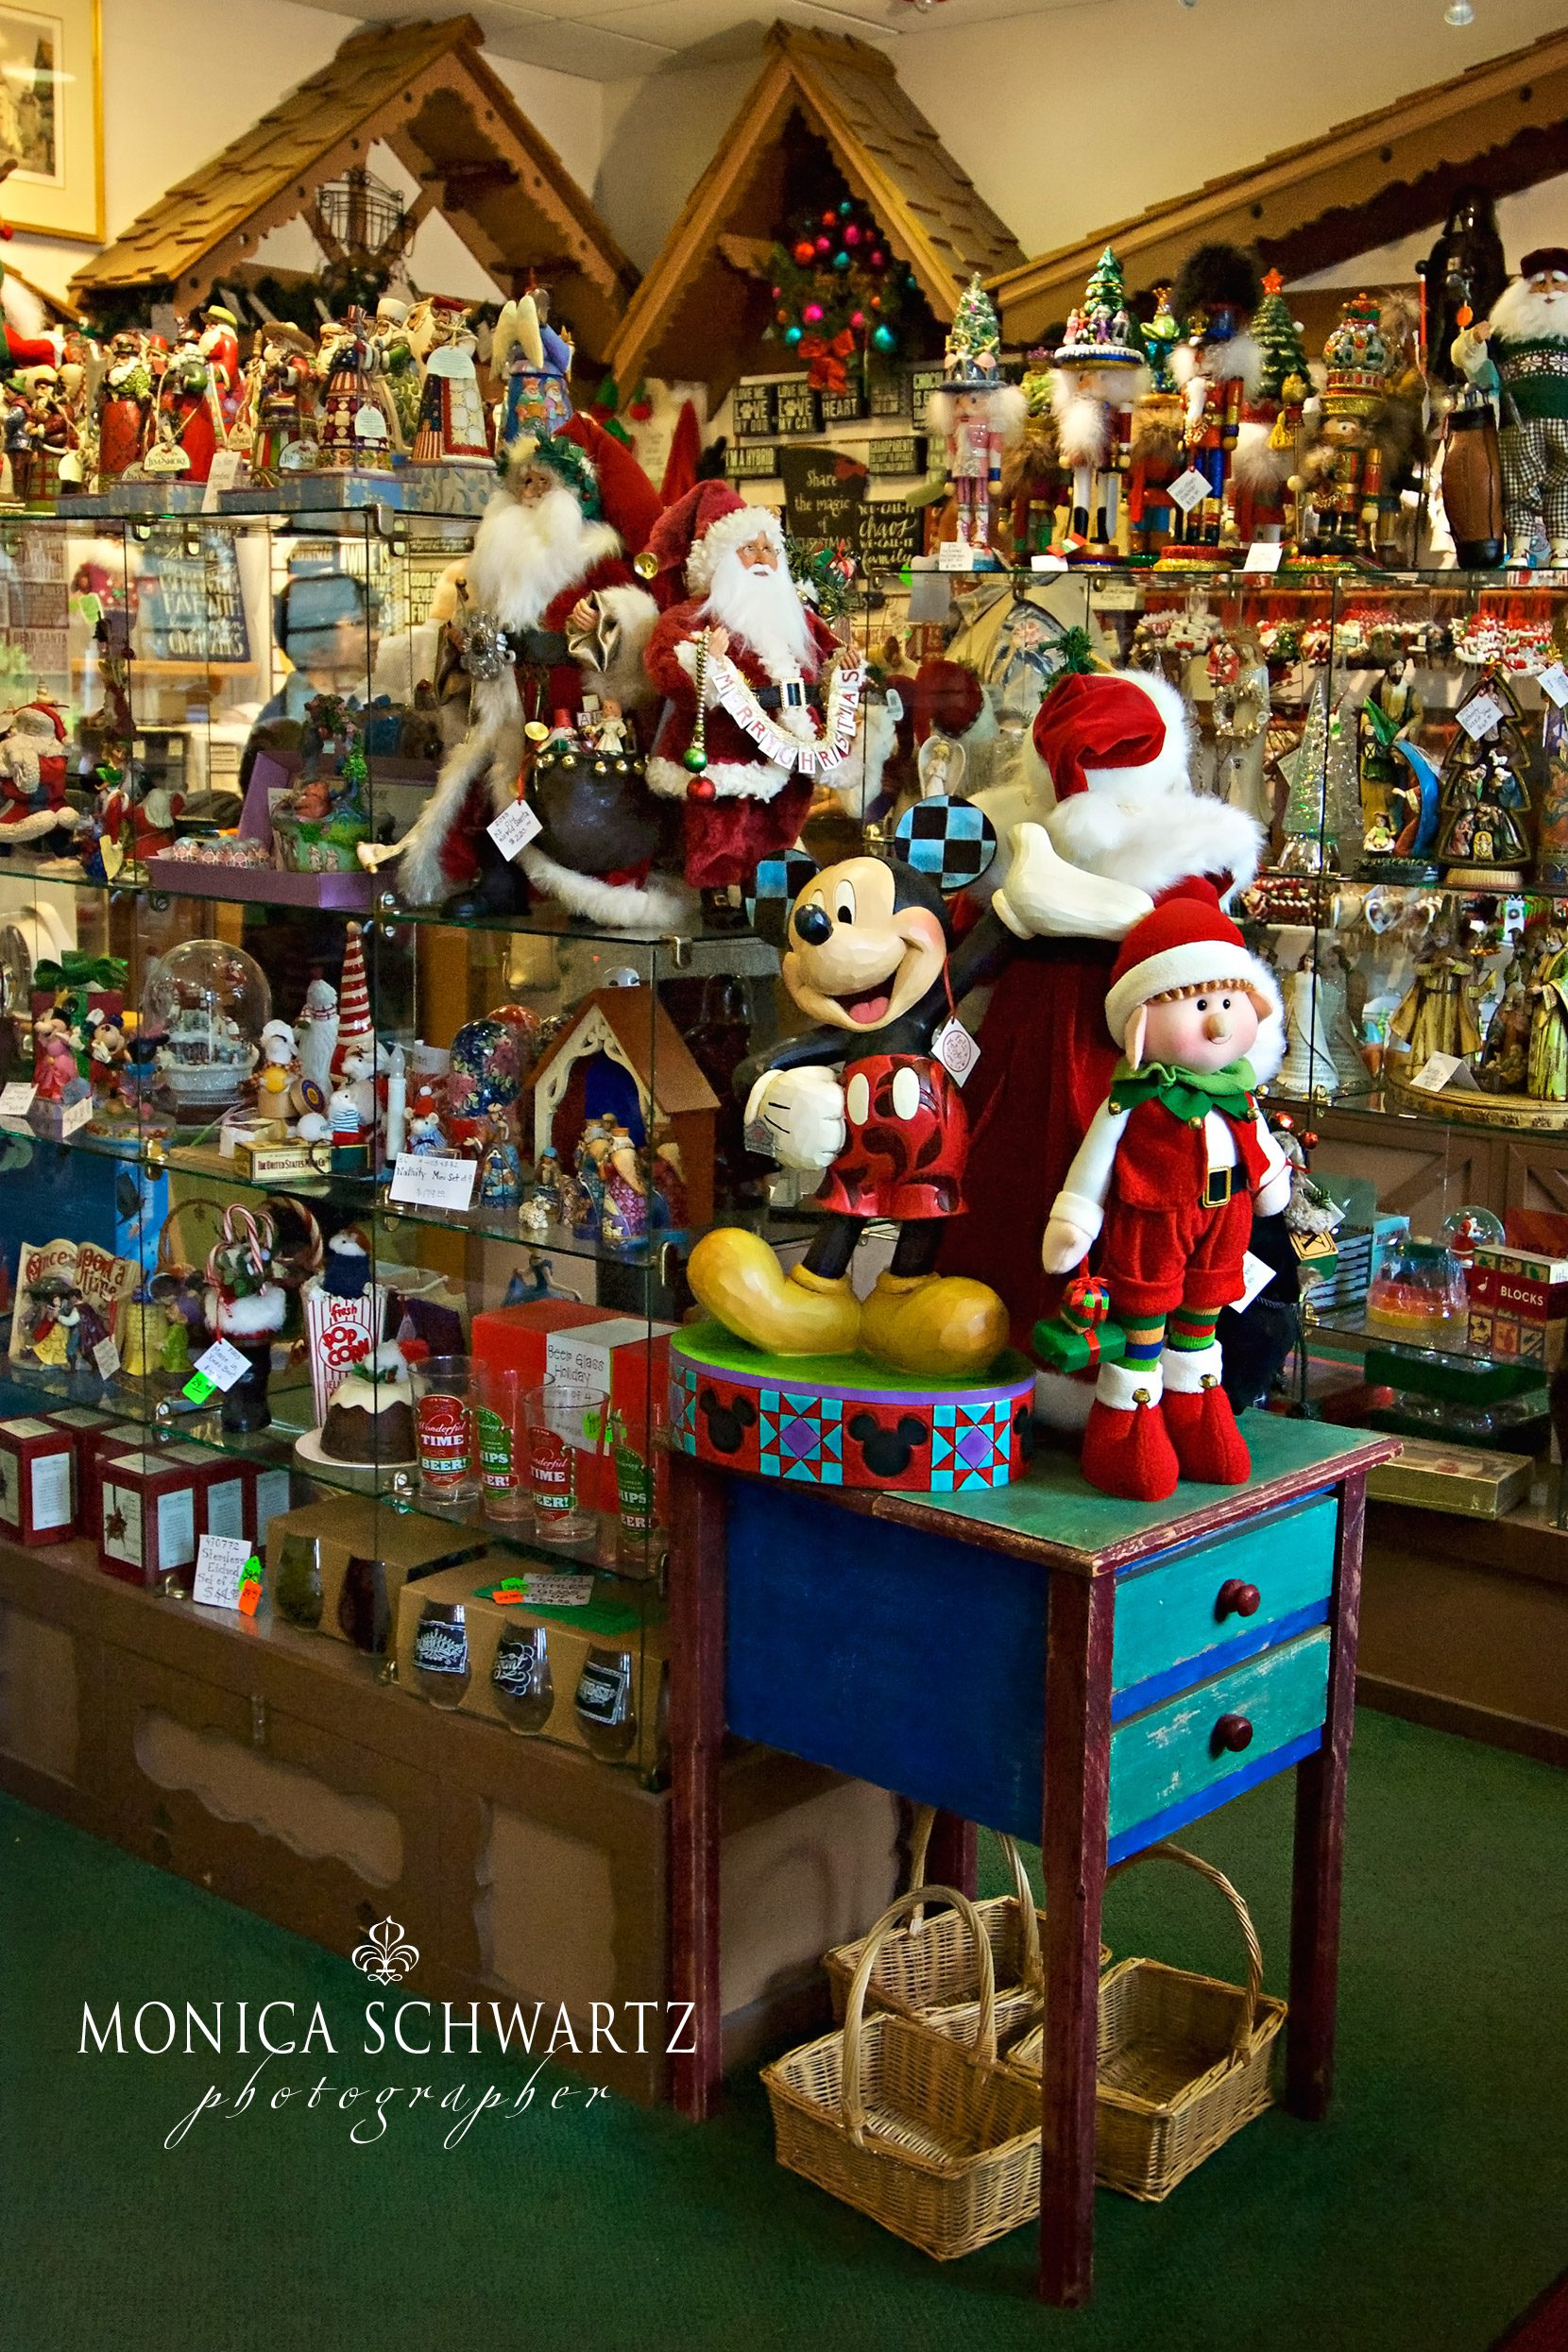 Kris-Kringle-of-Carmel-Christmas-shop-in-Carmel-by-the-Sea-California